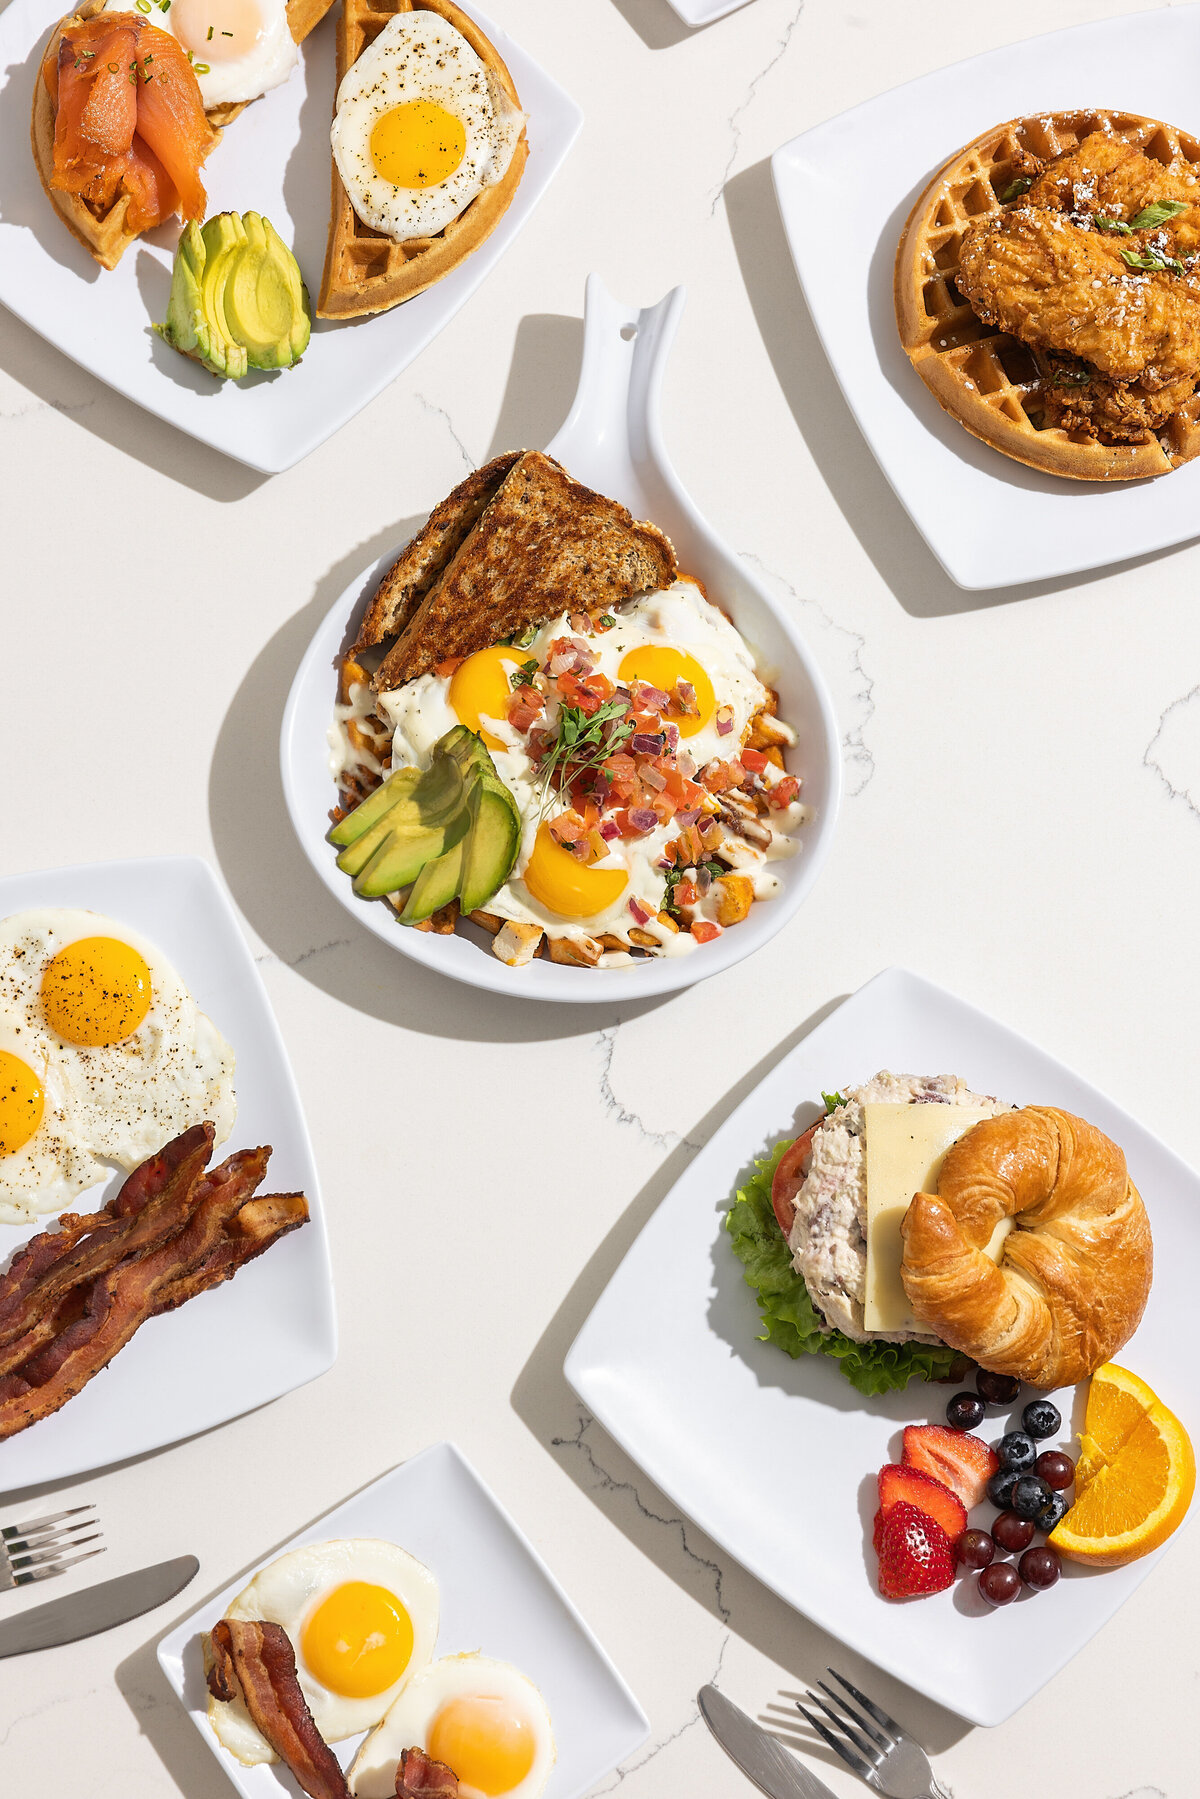 Various breakfast foods on plates